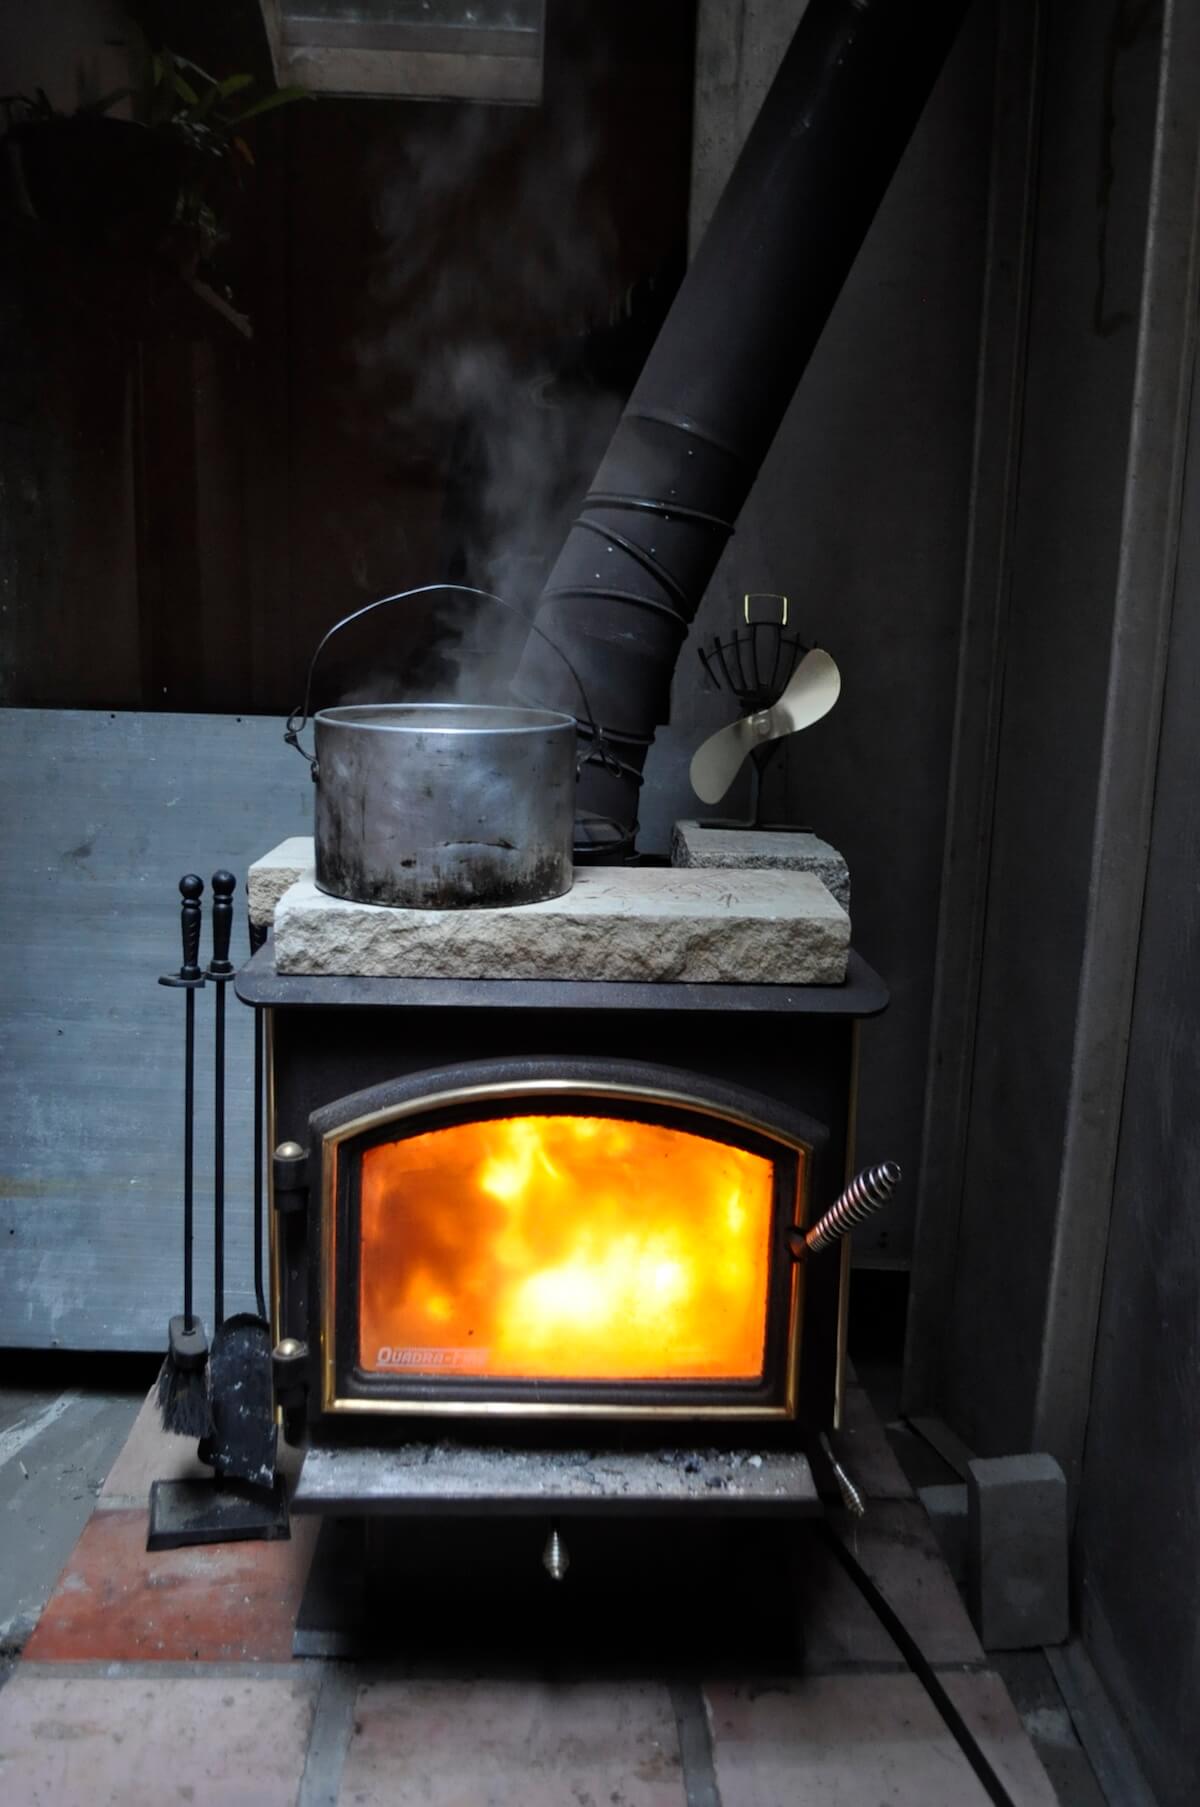 bone broth simmering on stove